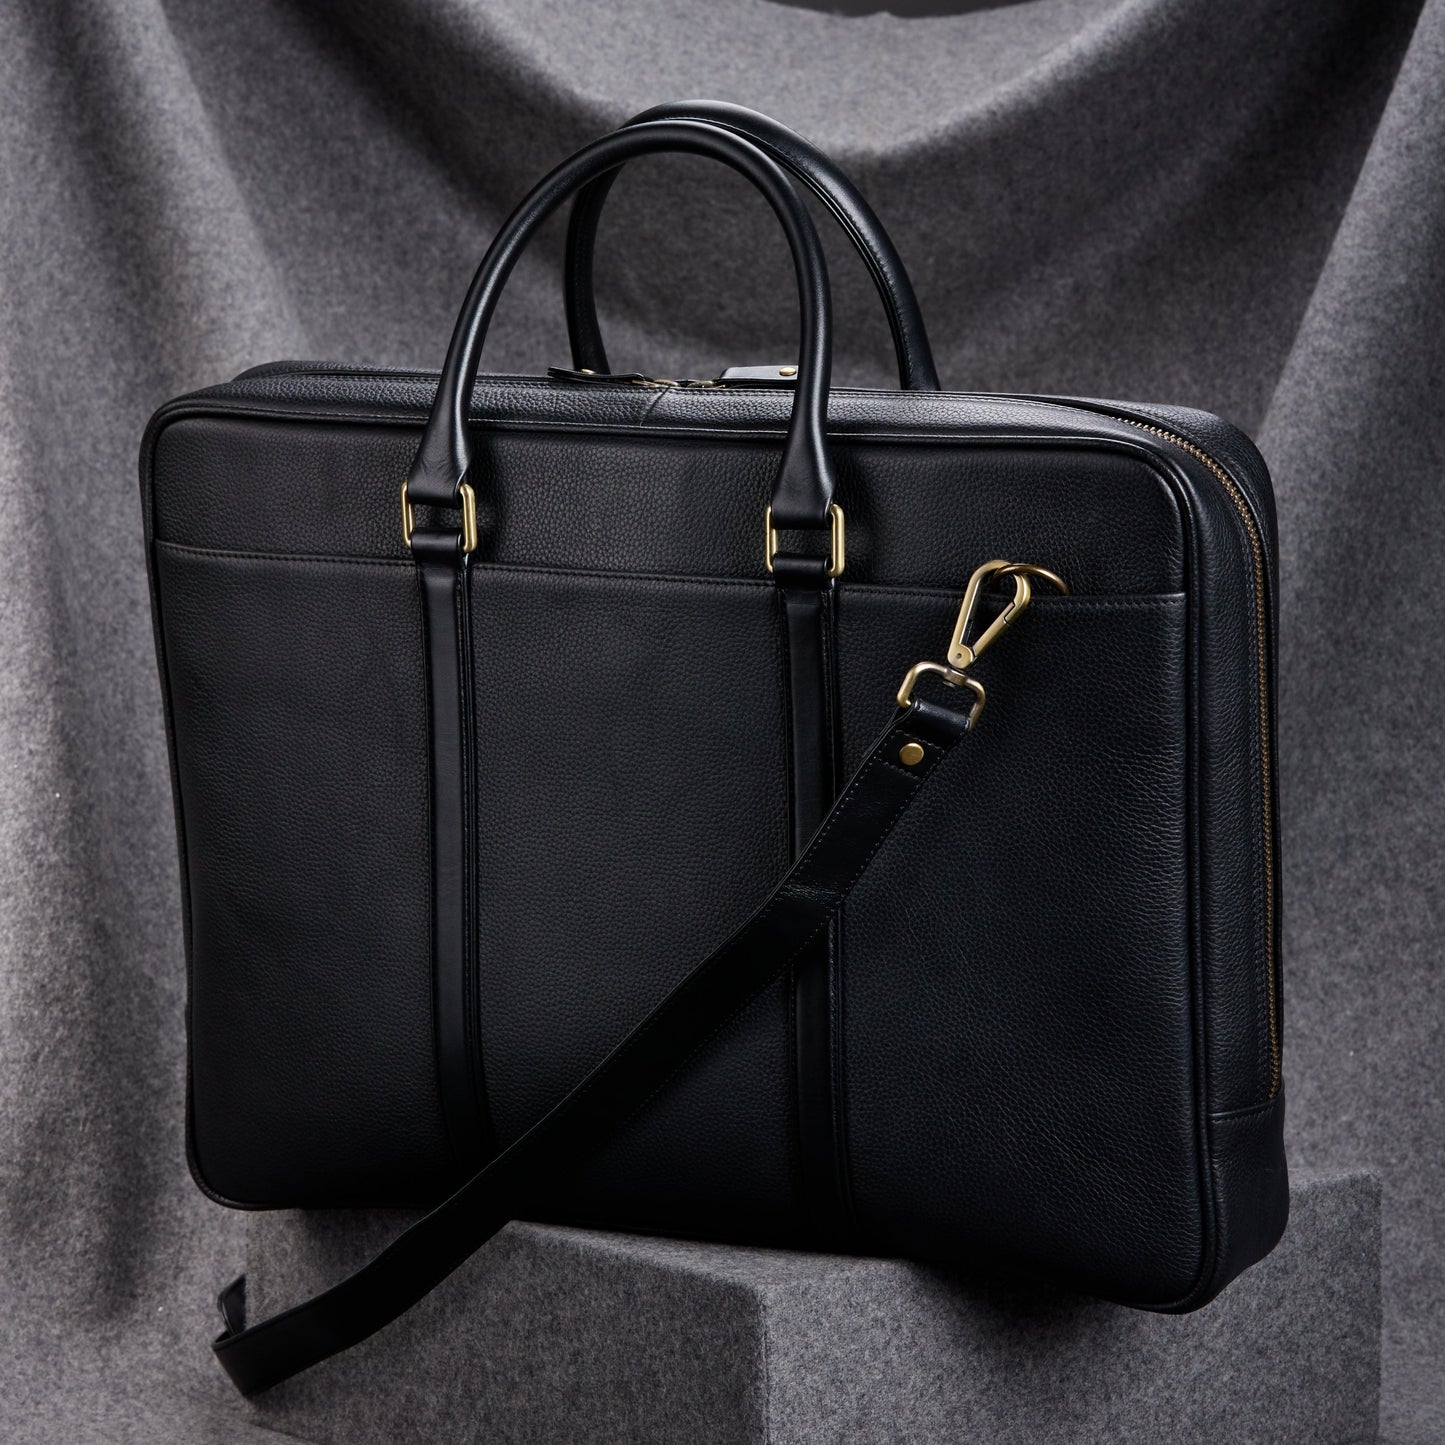 Black Leather Briefcase with shoulder strap